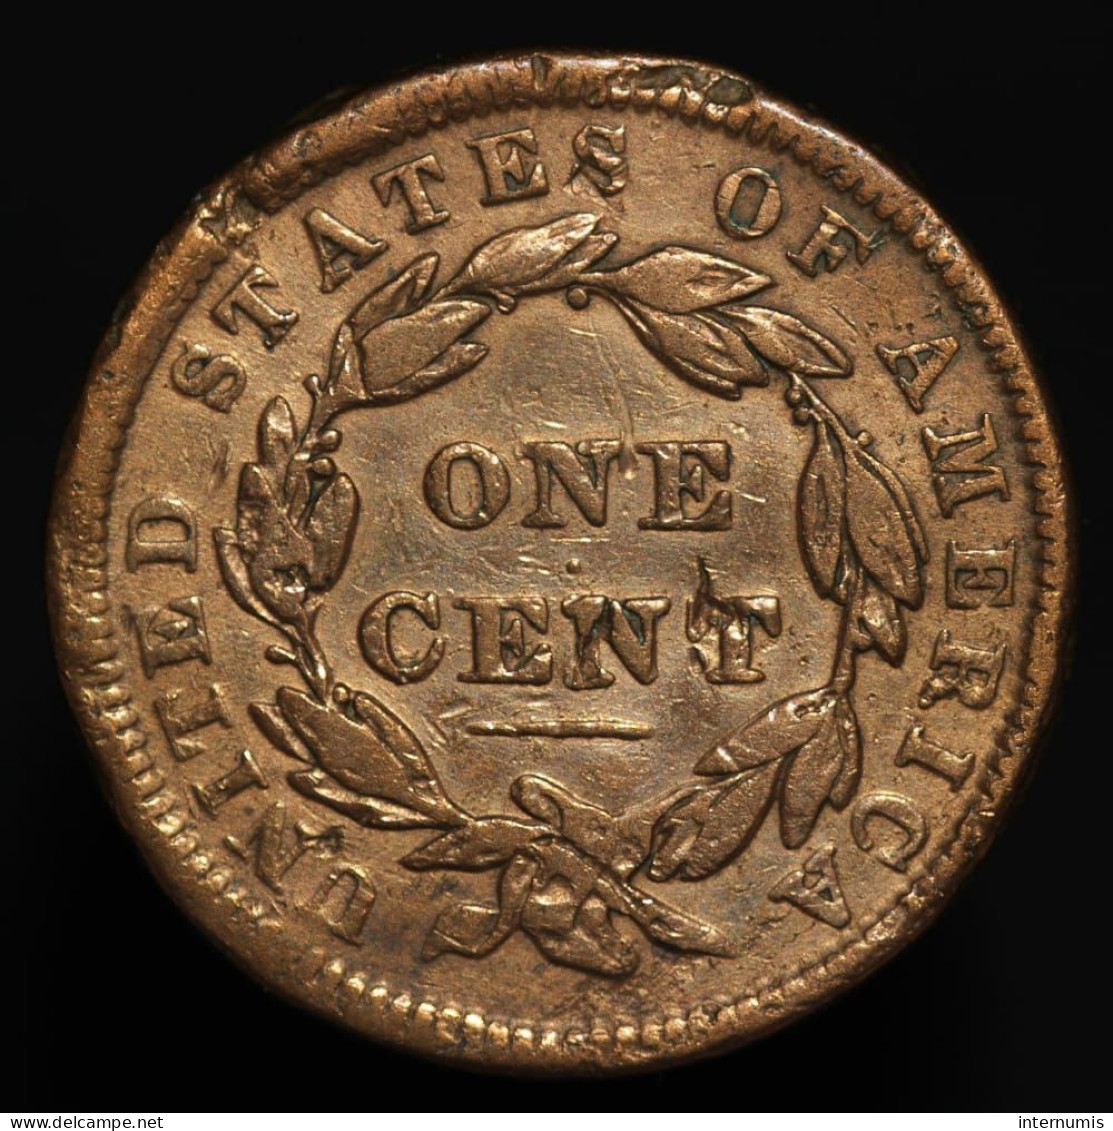 Etats-Unis / USA, Liberty Head, 1 Cent, 1838, Cuivre (Copper), TTB (EF), KM#45.2 - 1816-1839: Coronet Head